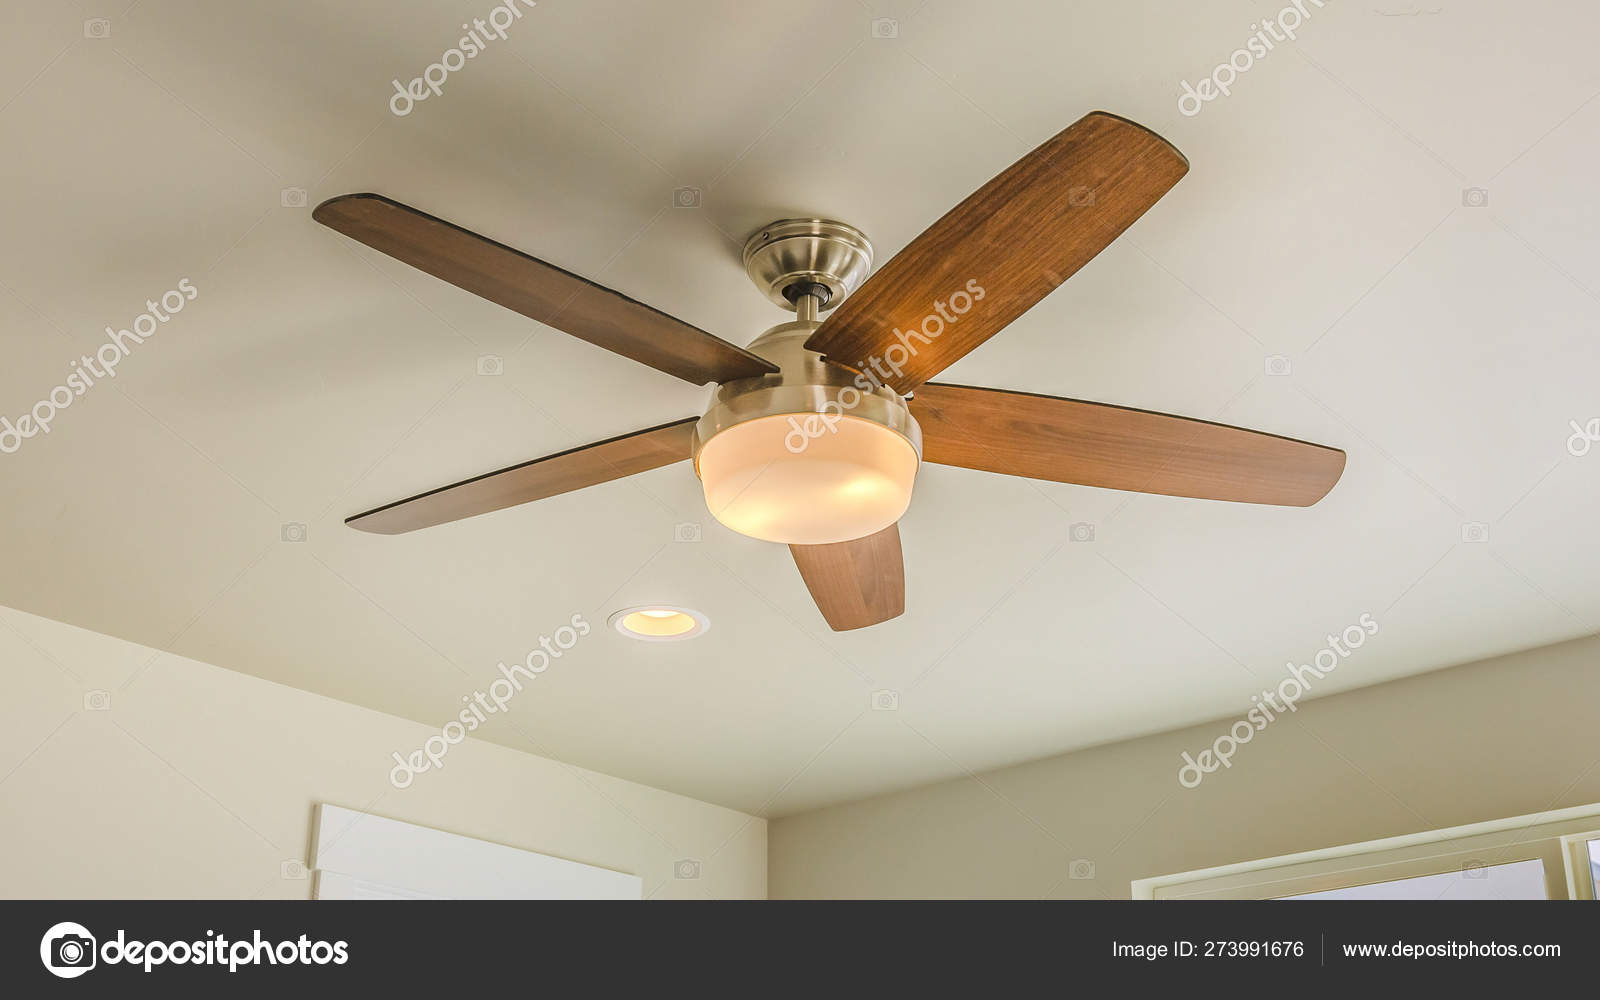 https://st4.depositphotos.com/13050236/27399/i/1600/depositphotos_273991676-stock-photo-panorama-frame-ceiling-fan-with.jpg